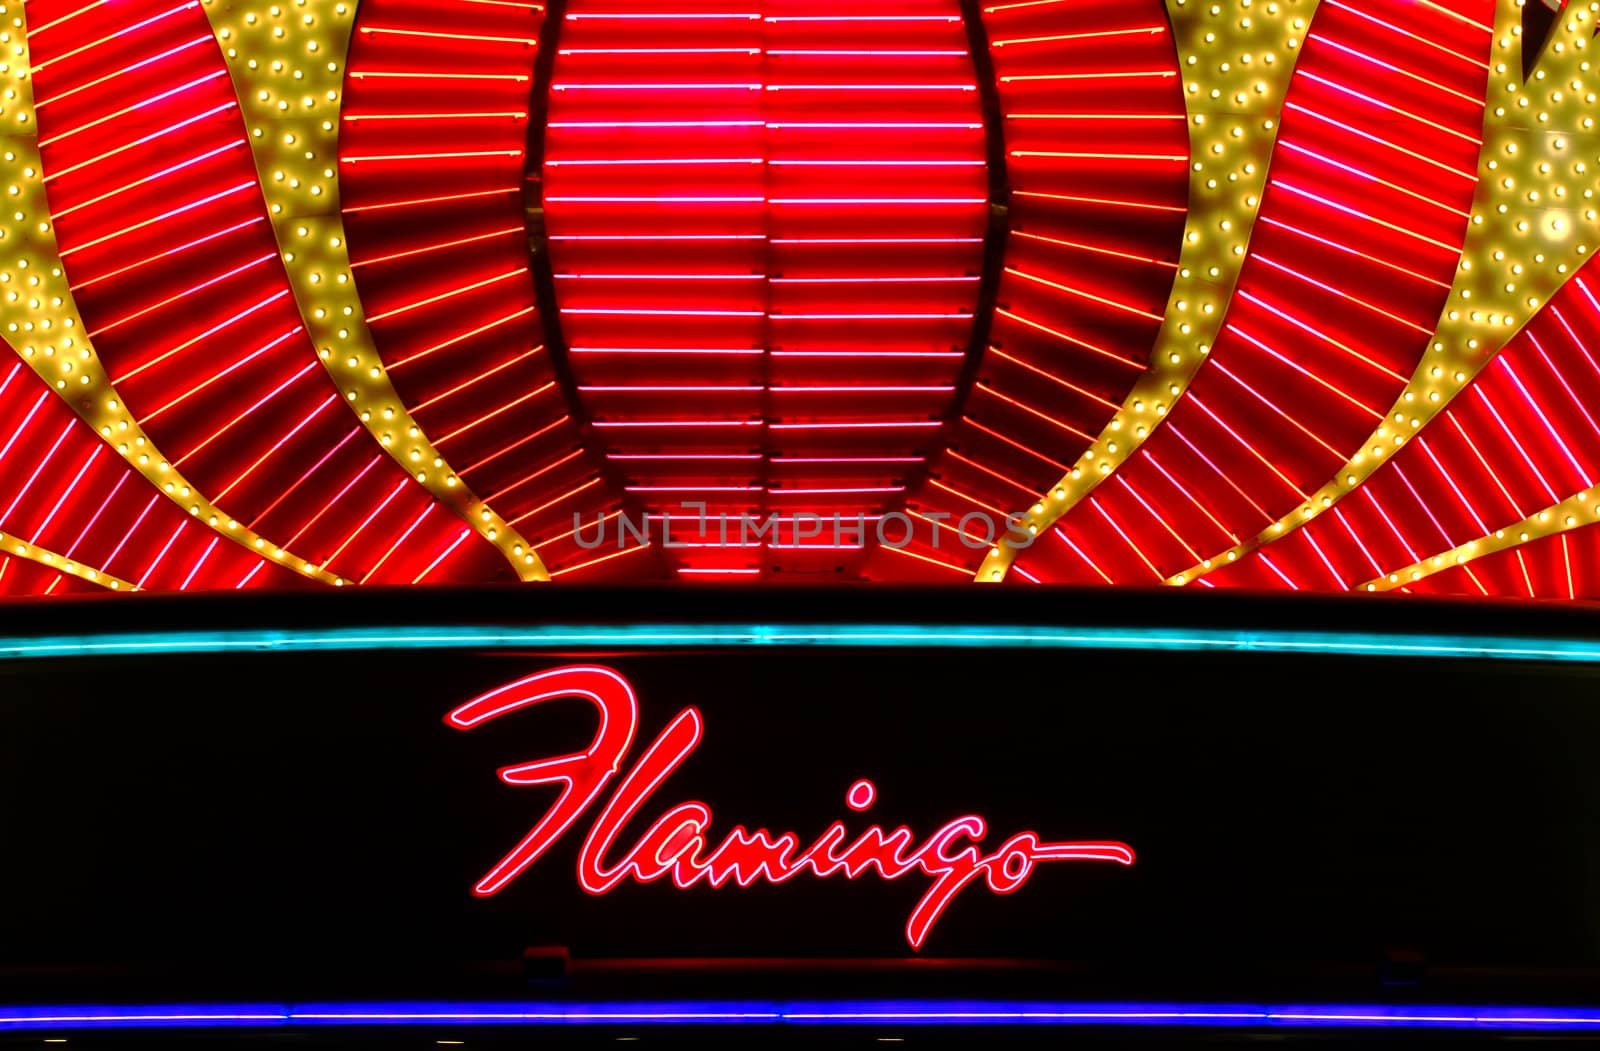 Flamingo Las Vegas by Wirepec